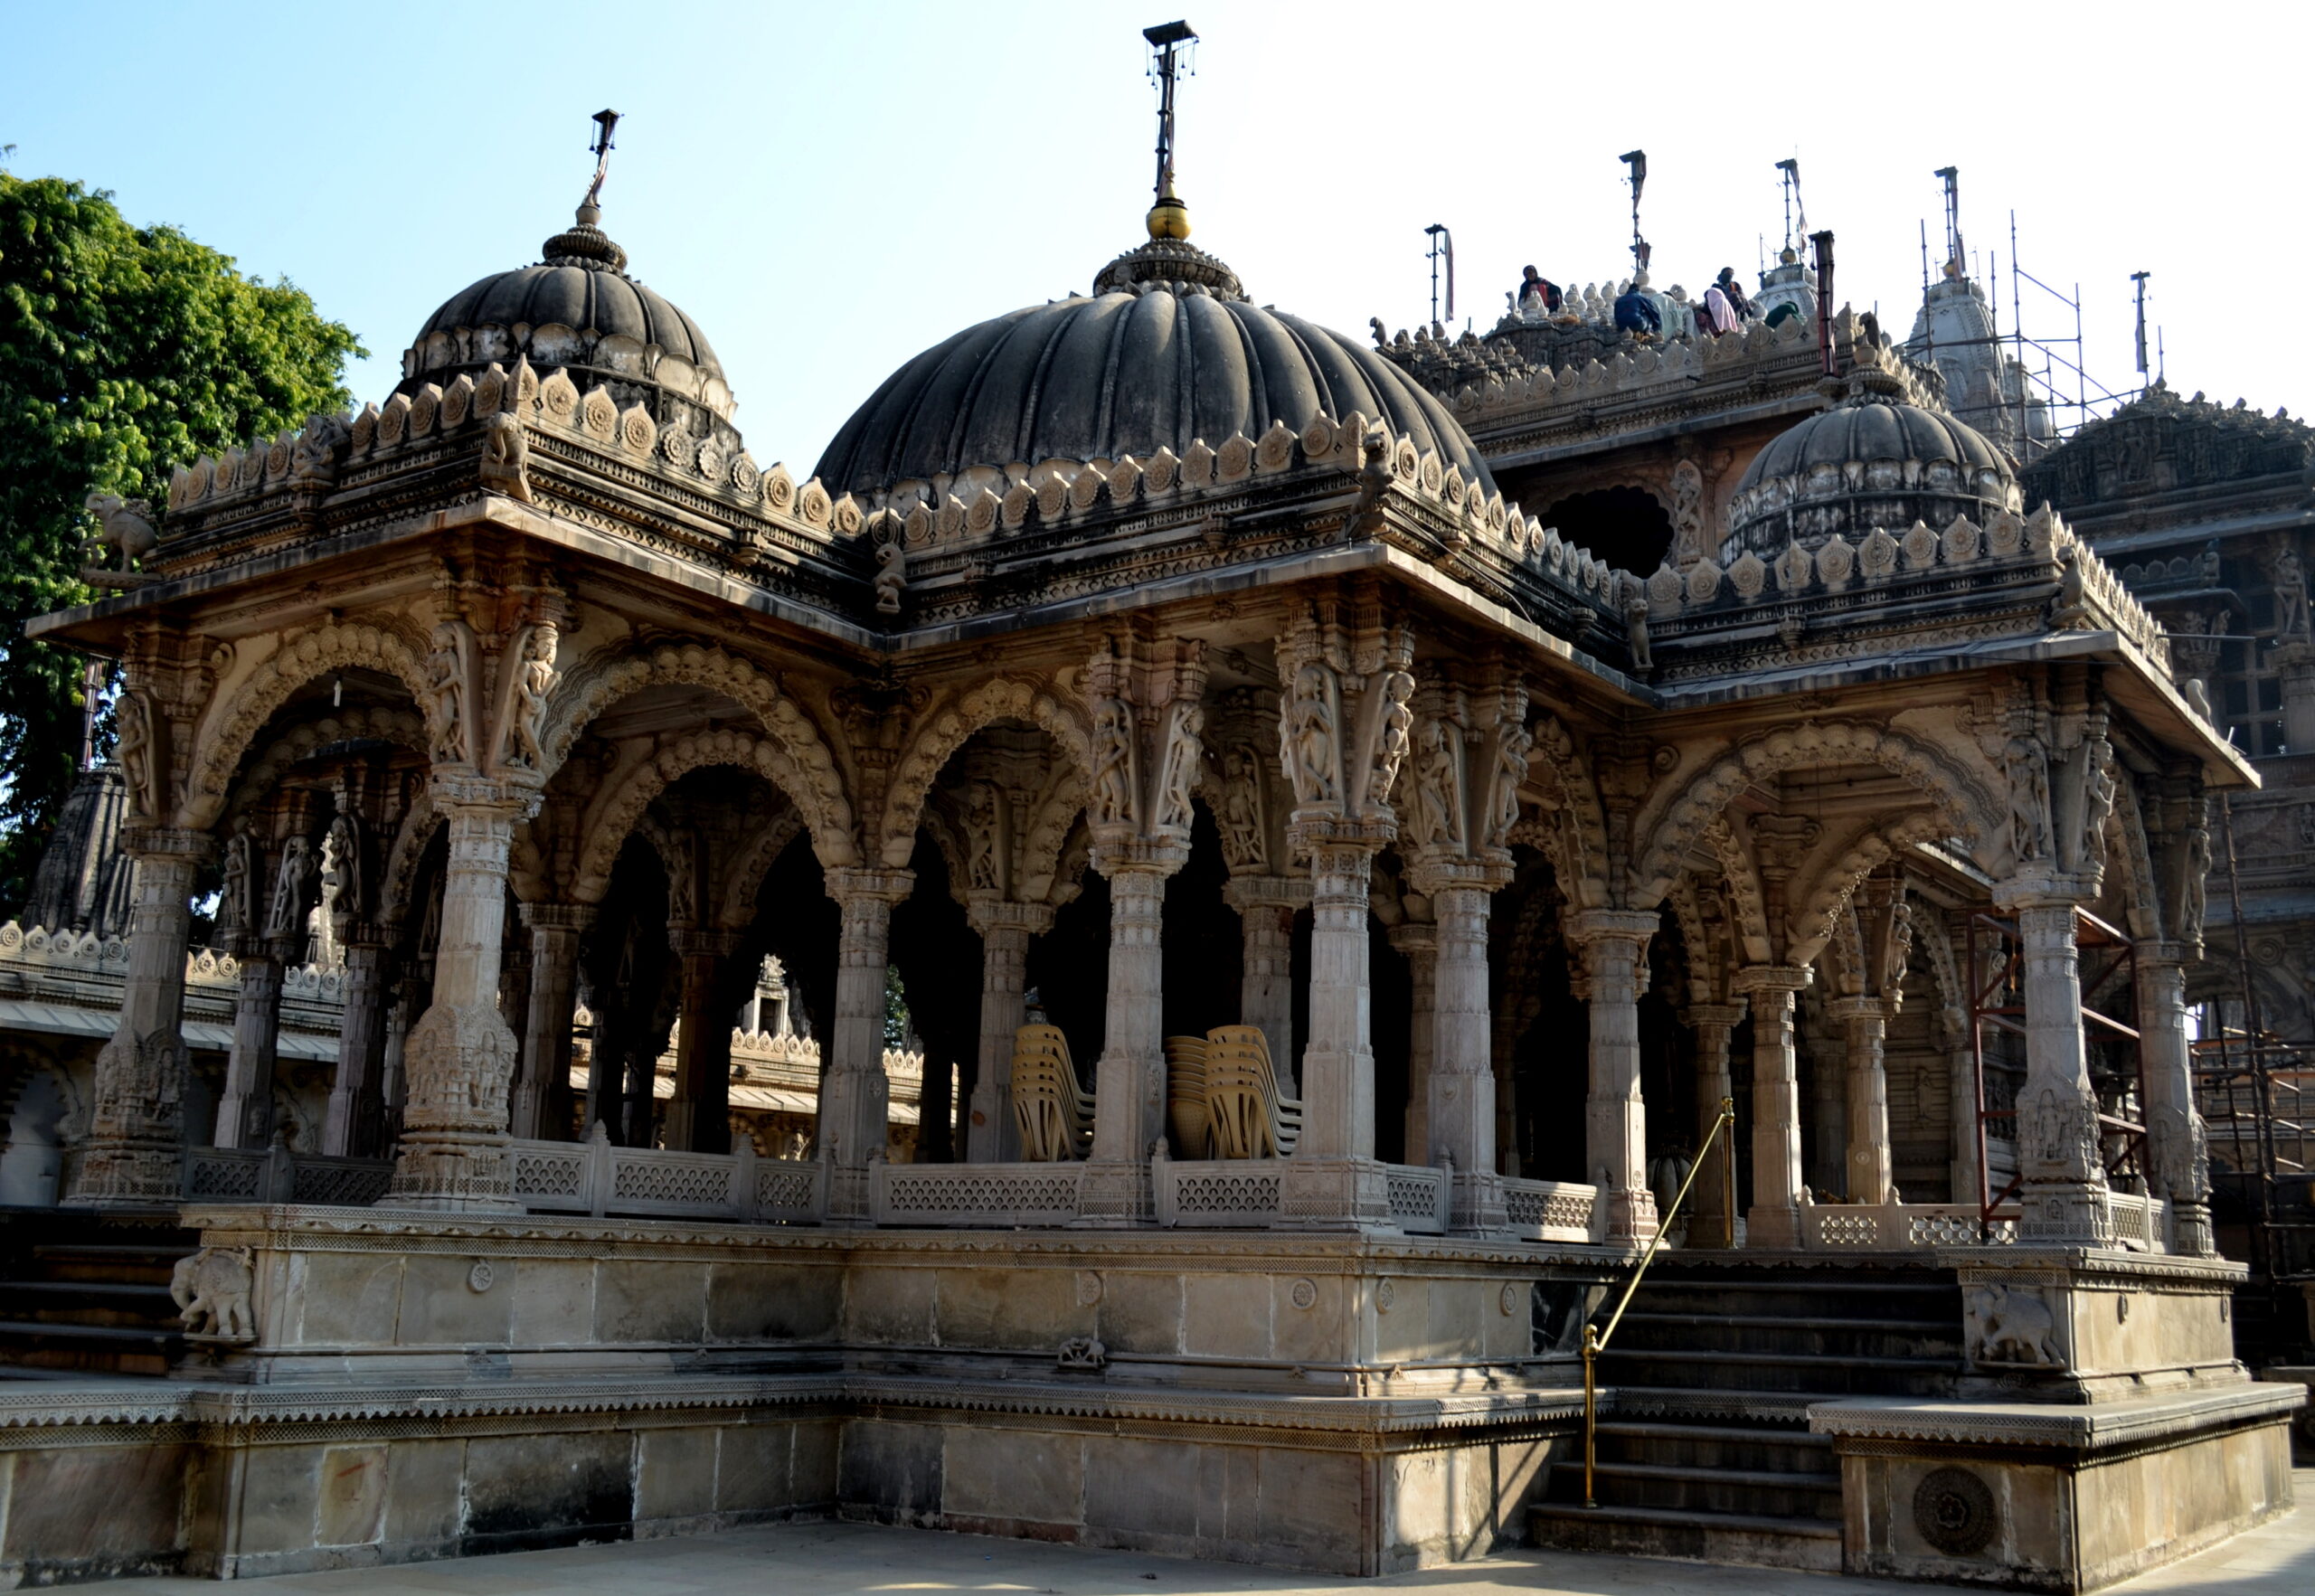 Three sactuaries of the Hutheesing Jain Temple